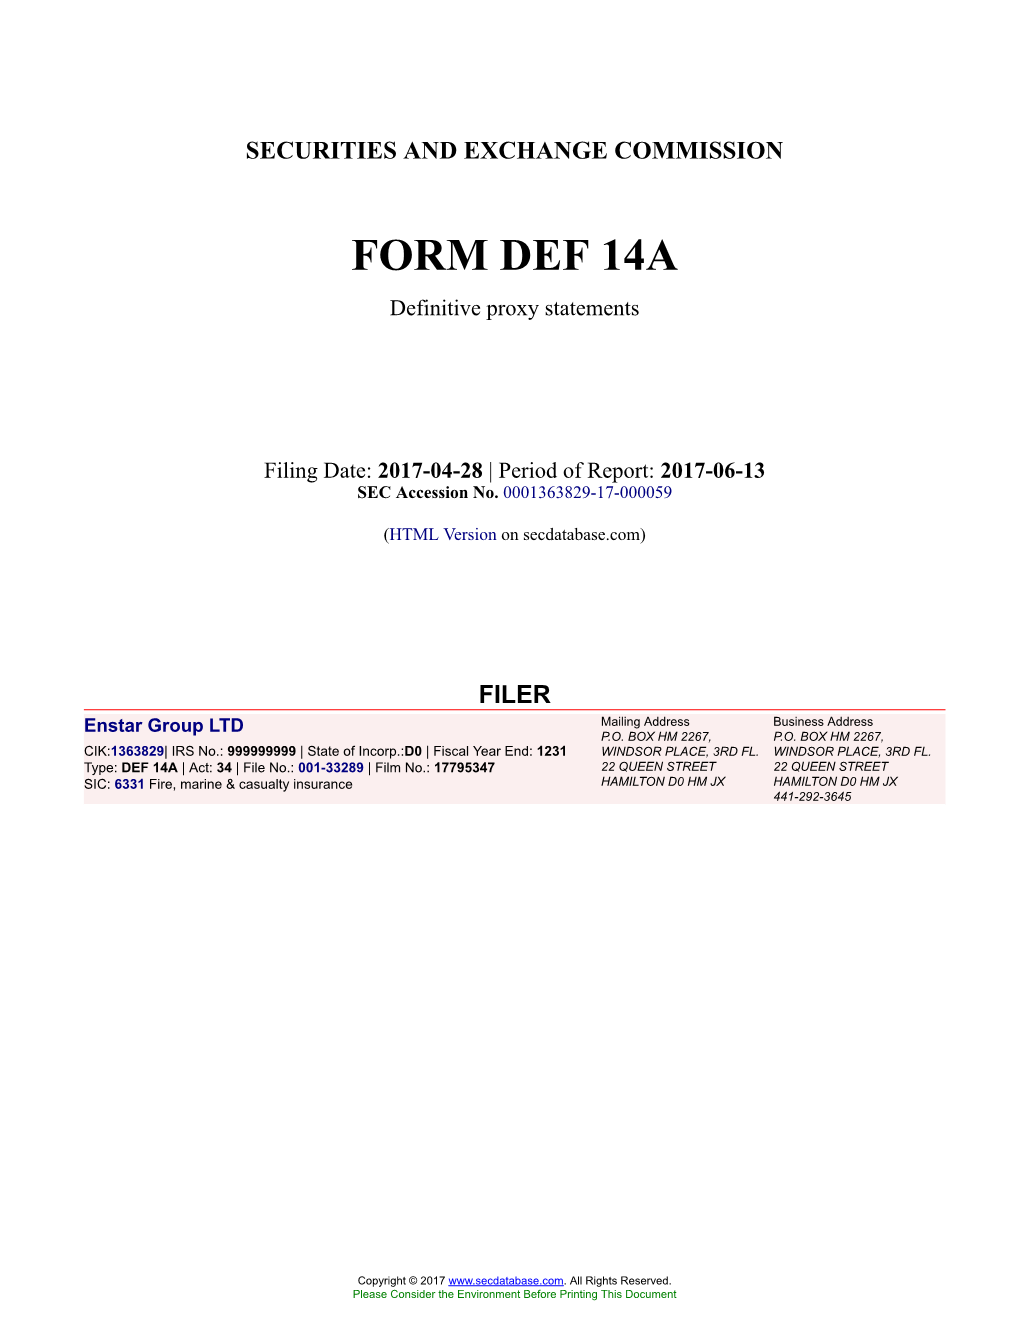 Enstar Group LTD Form DEF 14A Filed 2017-04-28